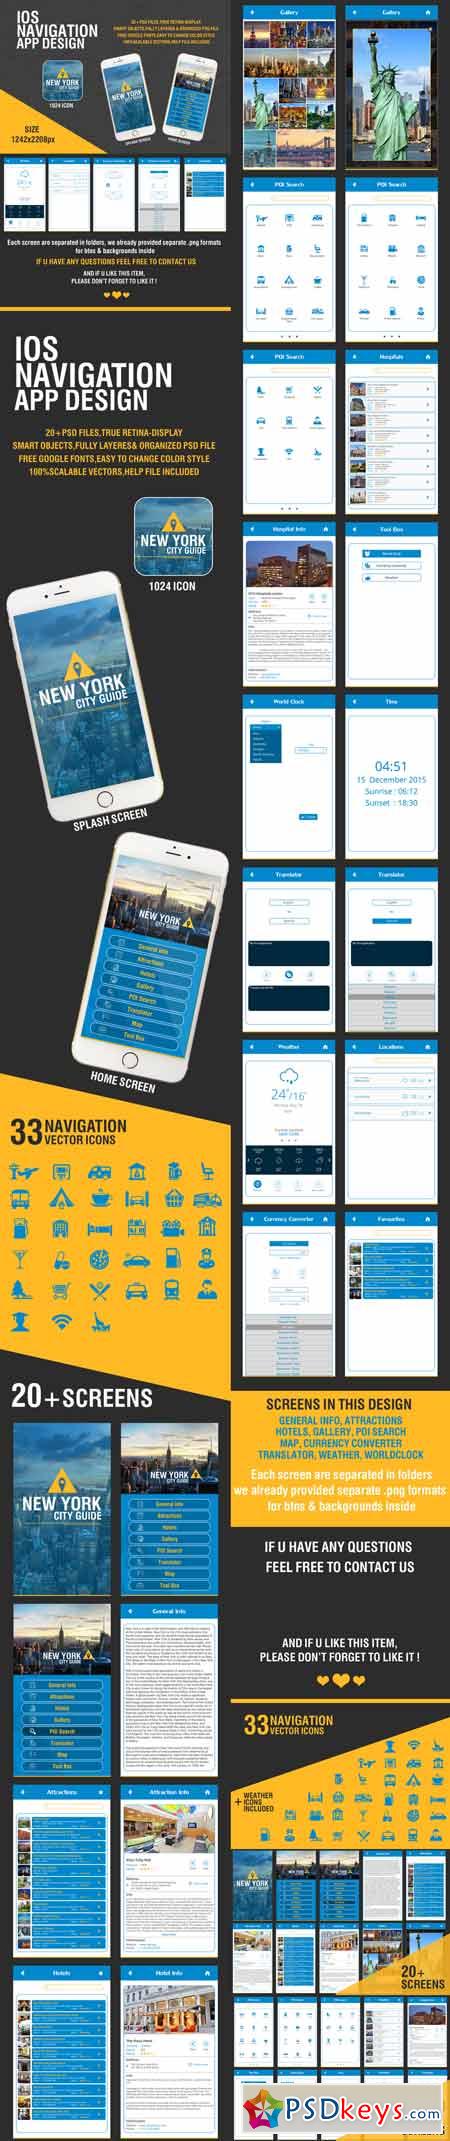 Navigation IOS App Design 409350